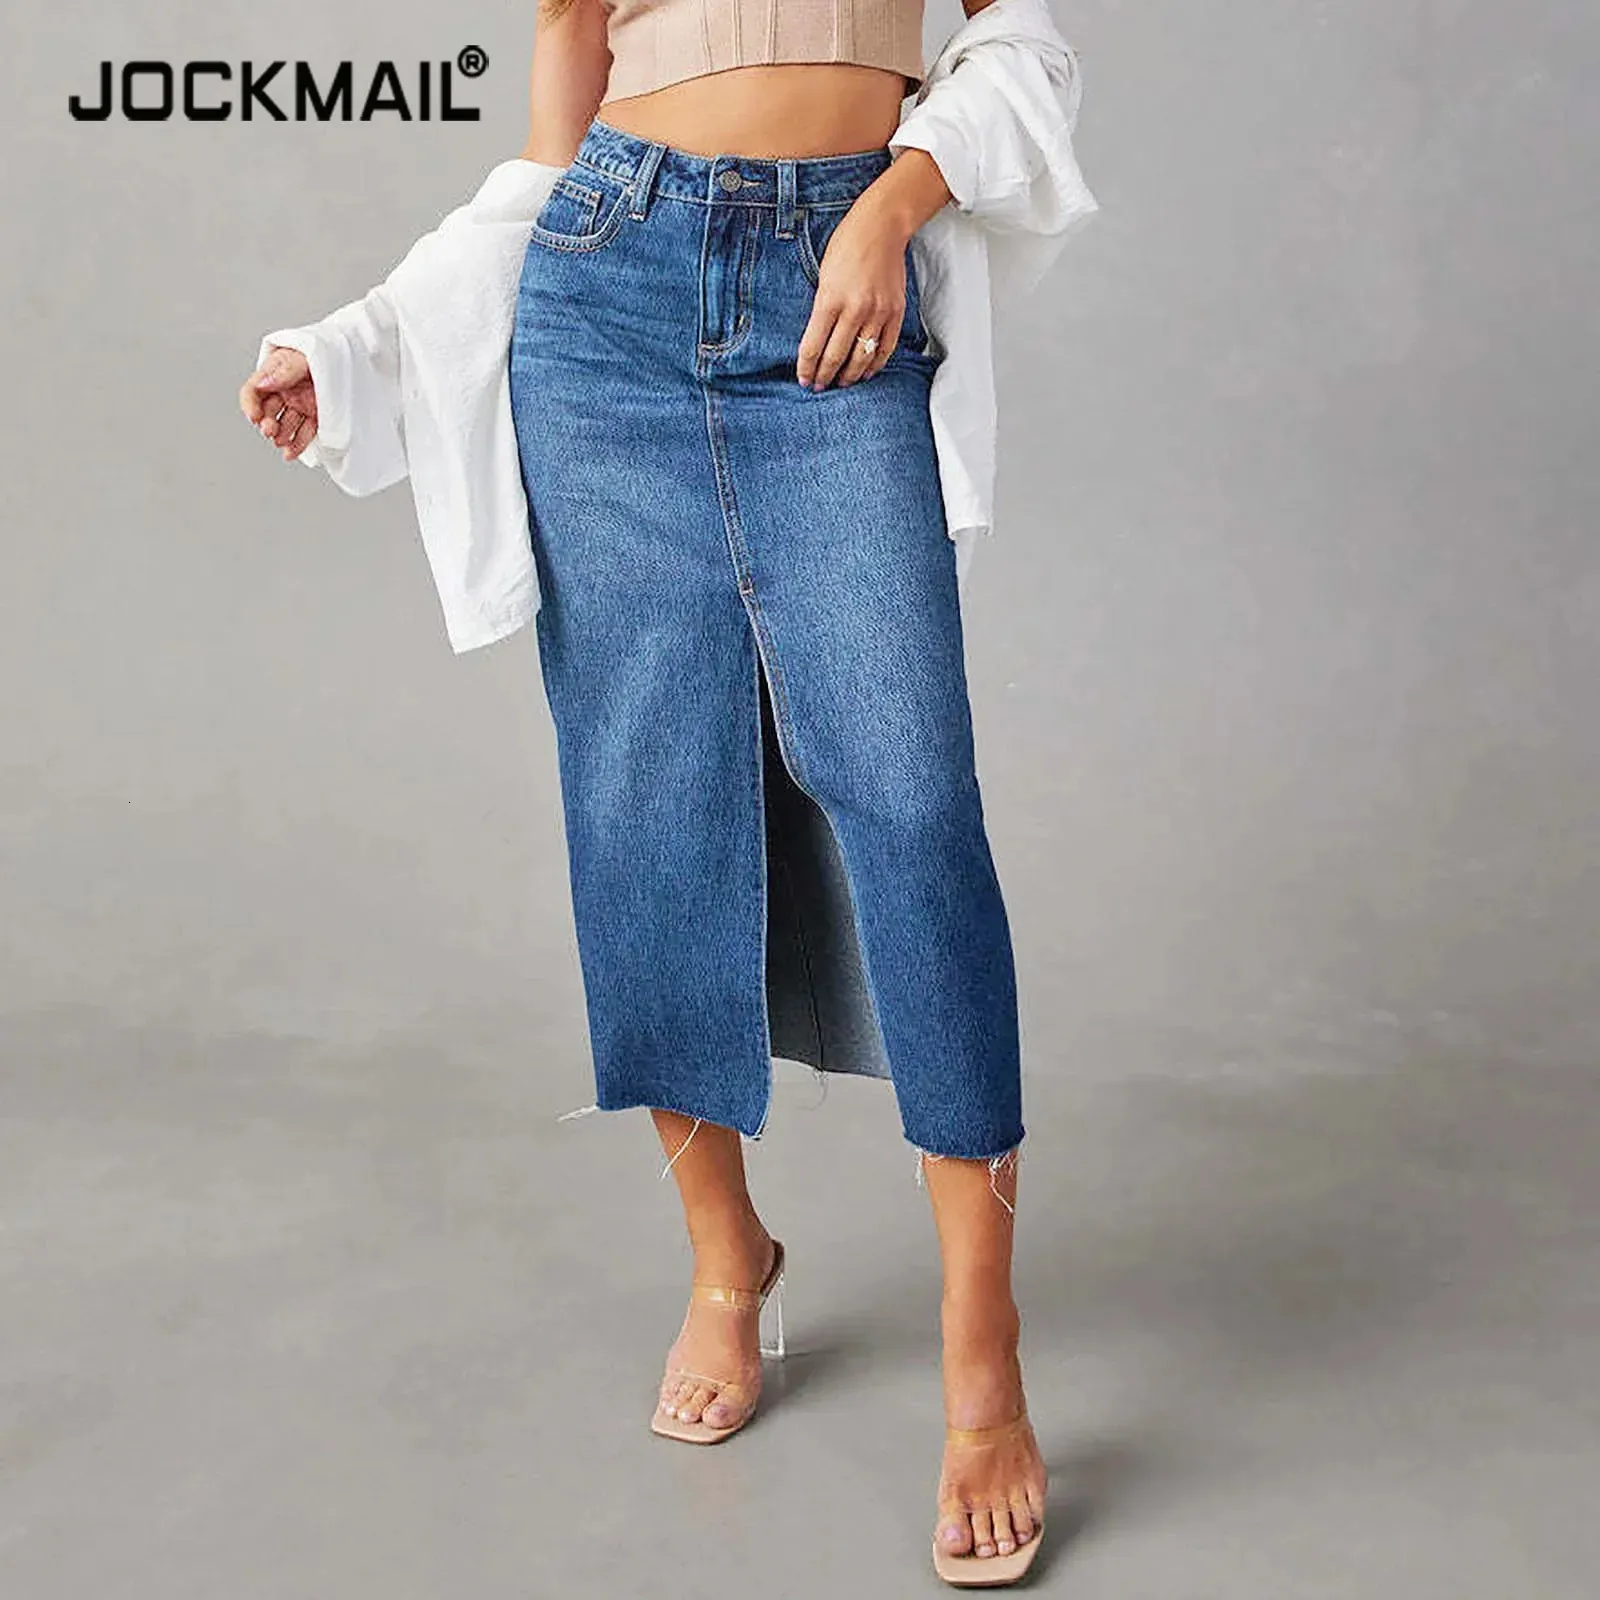 Salia de jeans de jeans dividida feminino Saias de minimalismo para mulheres de streetwear wasit jean feminina longa moda esqui 240424